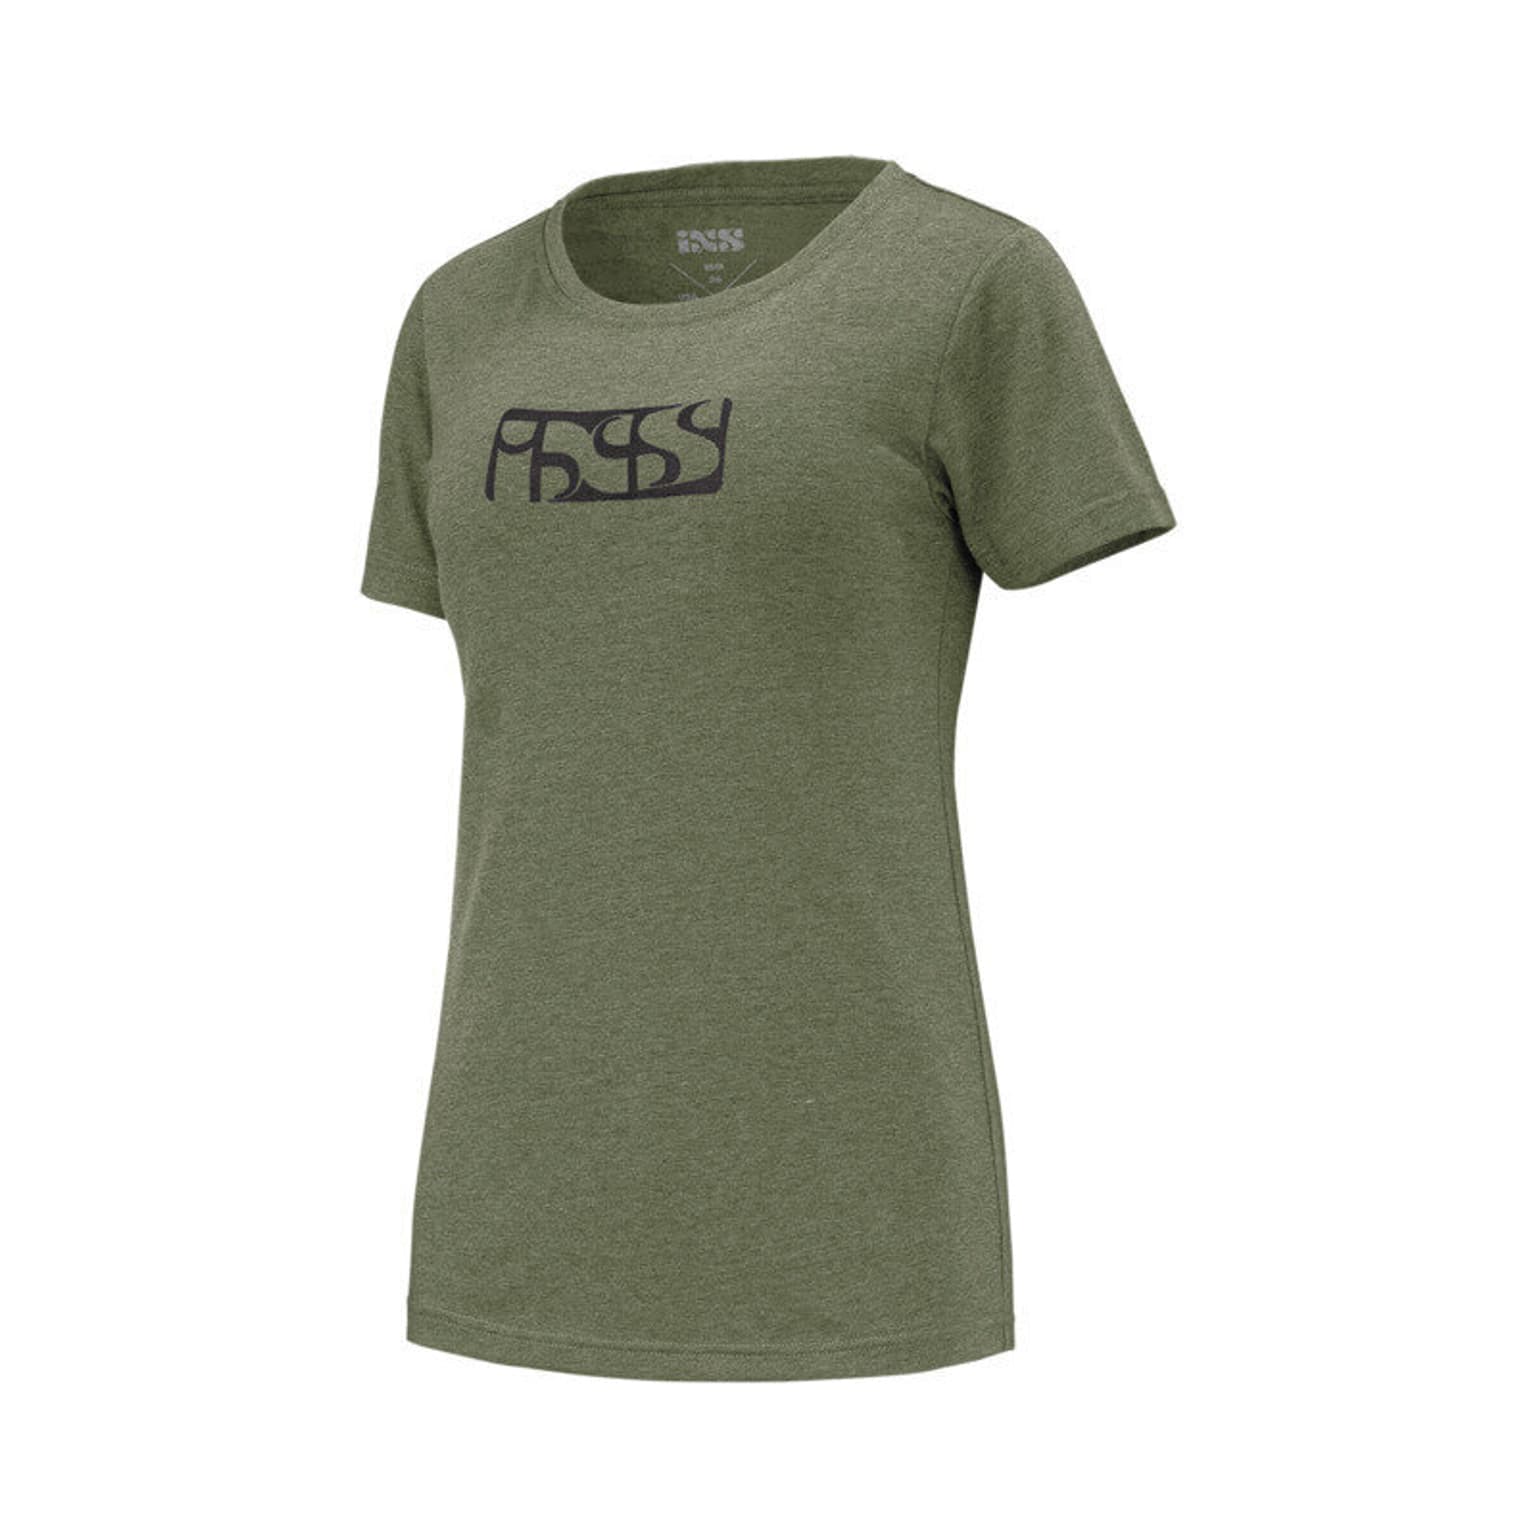 iXS iXS Brand Tee T-shirt kaki 1